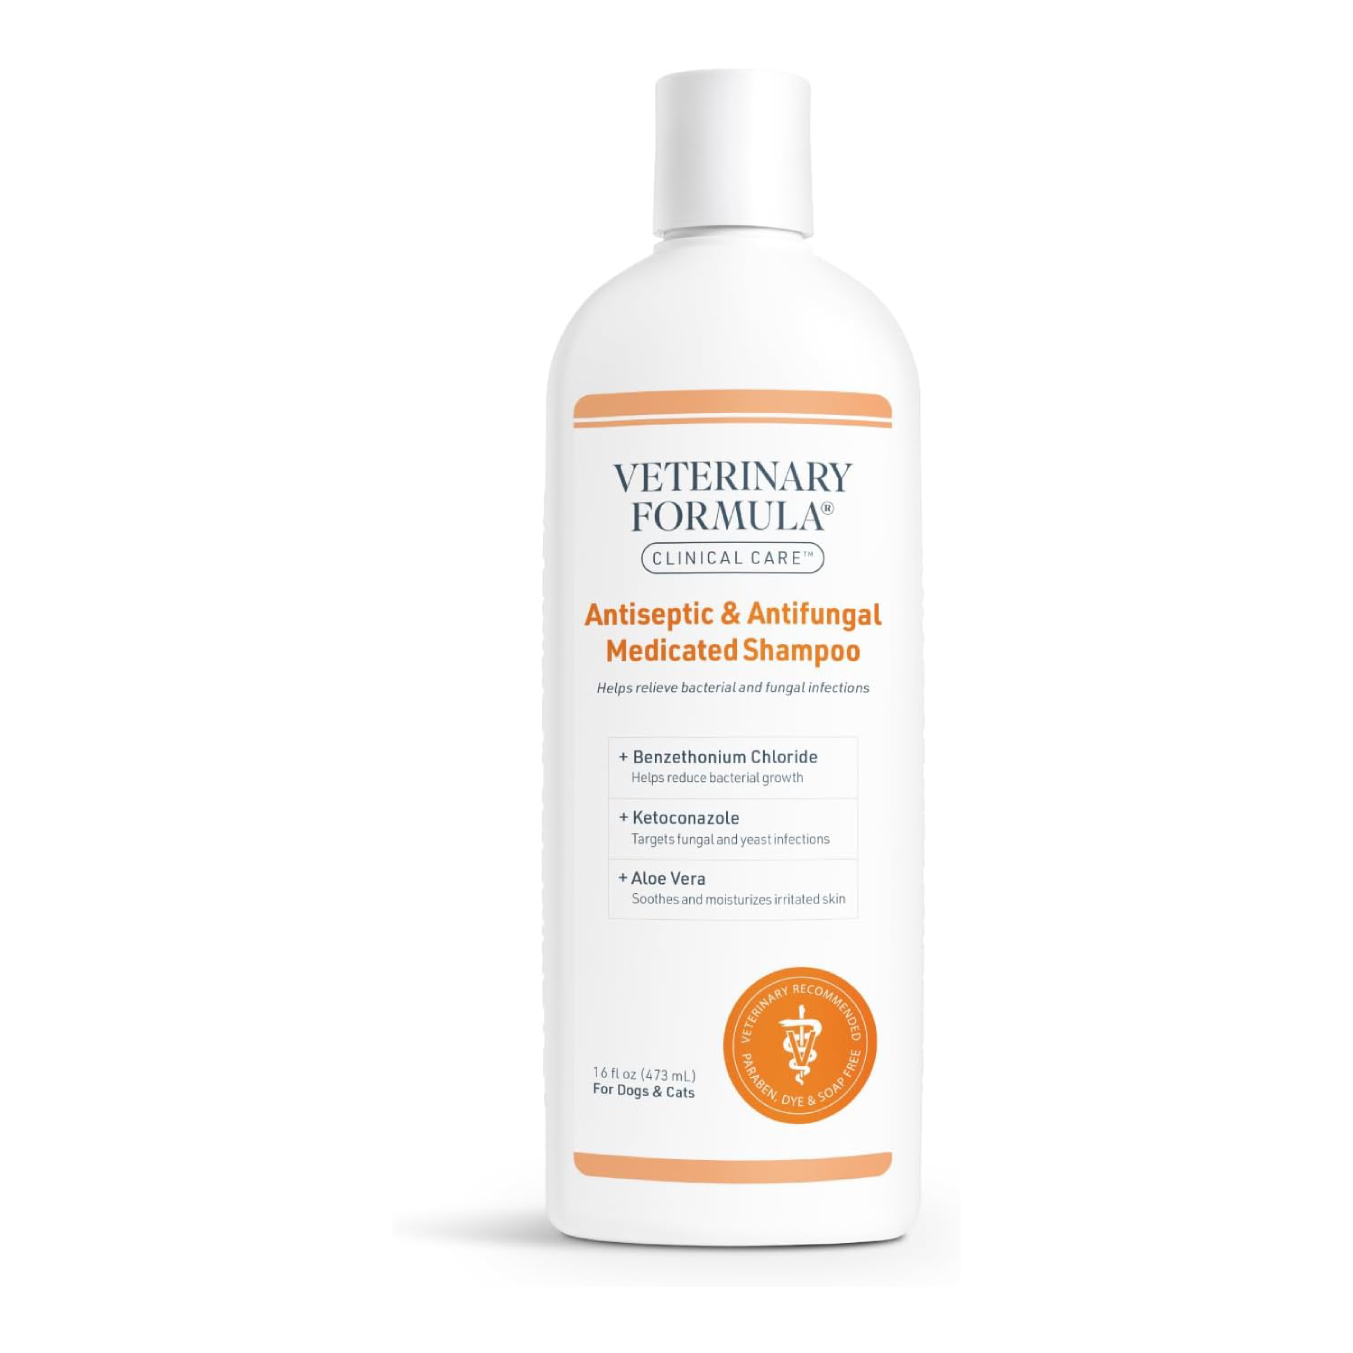 Veterinary Formula Clinical Care Antiseptic & Antifungal Shampoo